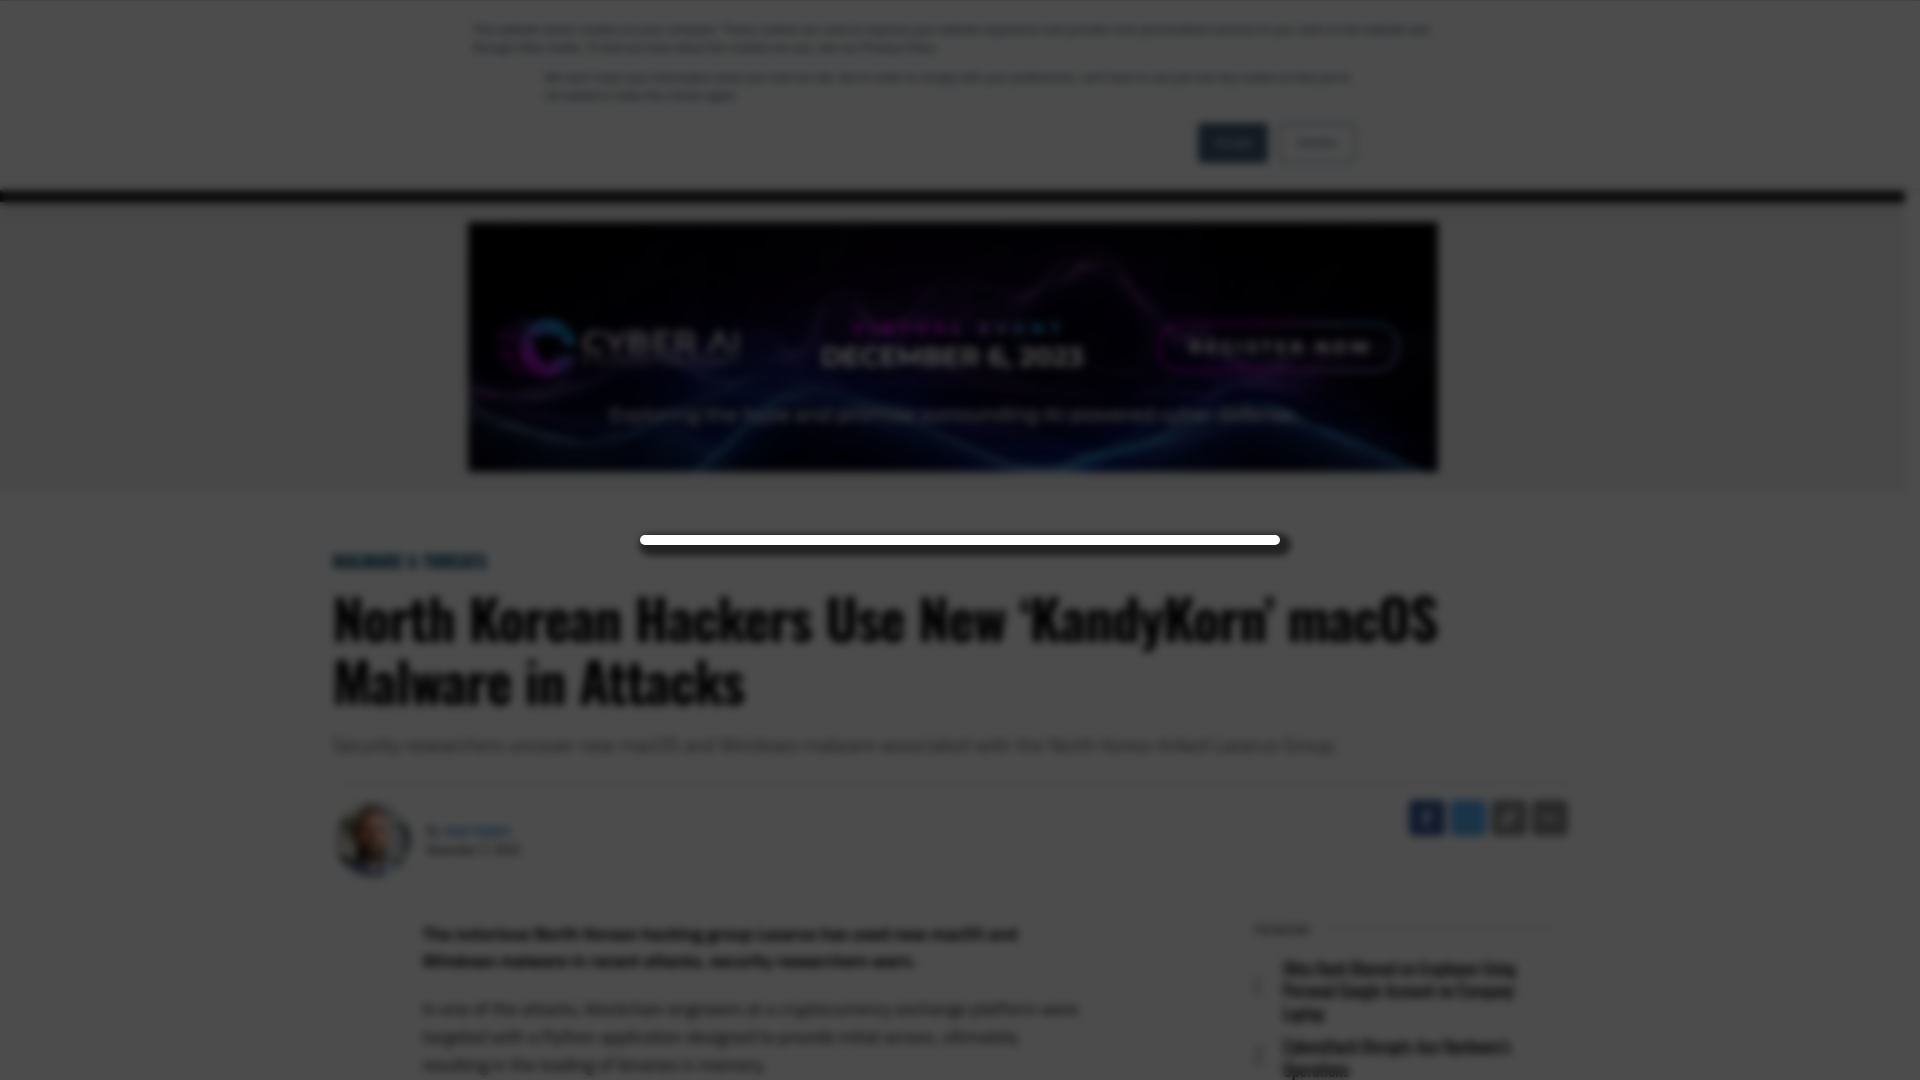 North Korean Hackers Use New 'KandyKorn' macOS Malware in Attacks - SecurityWeek